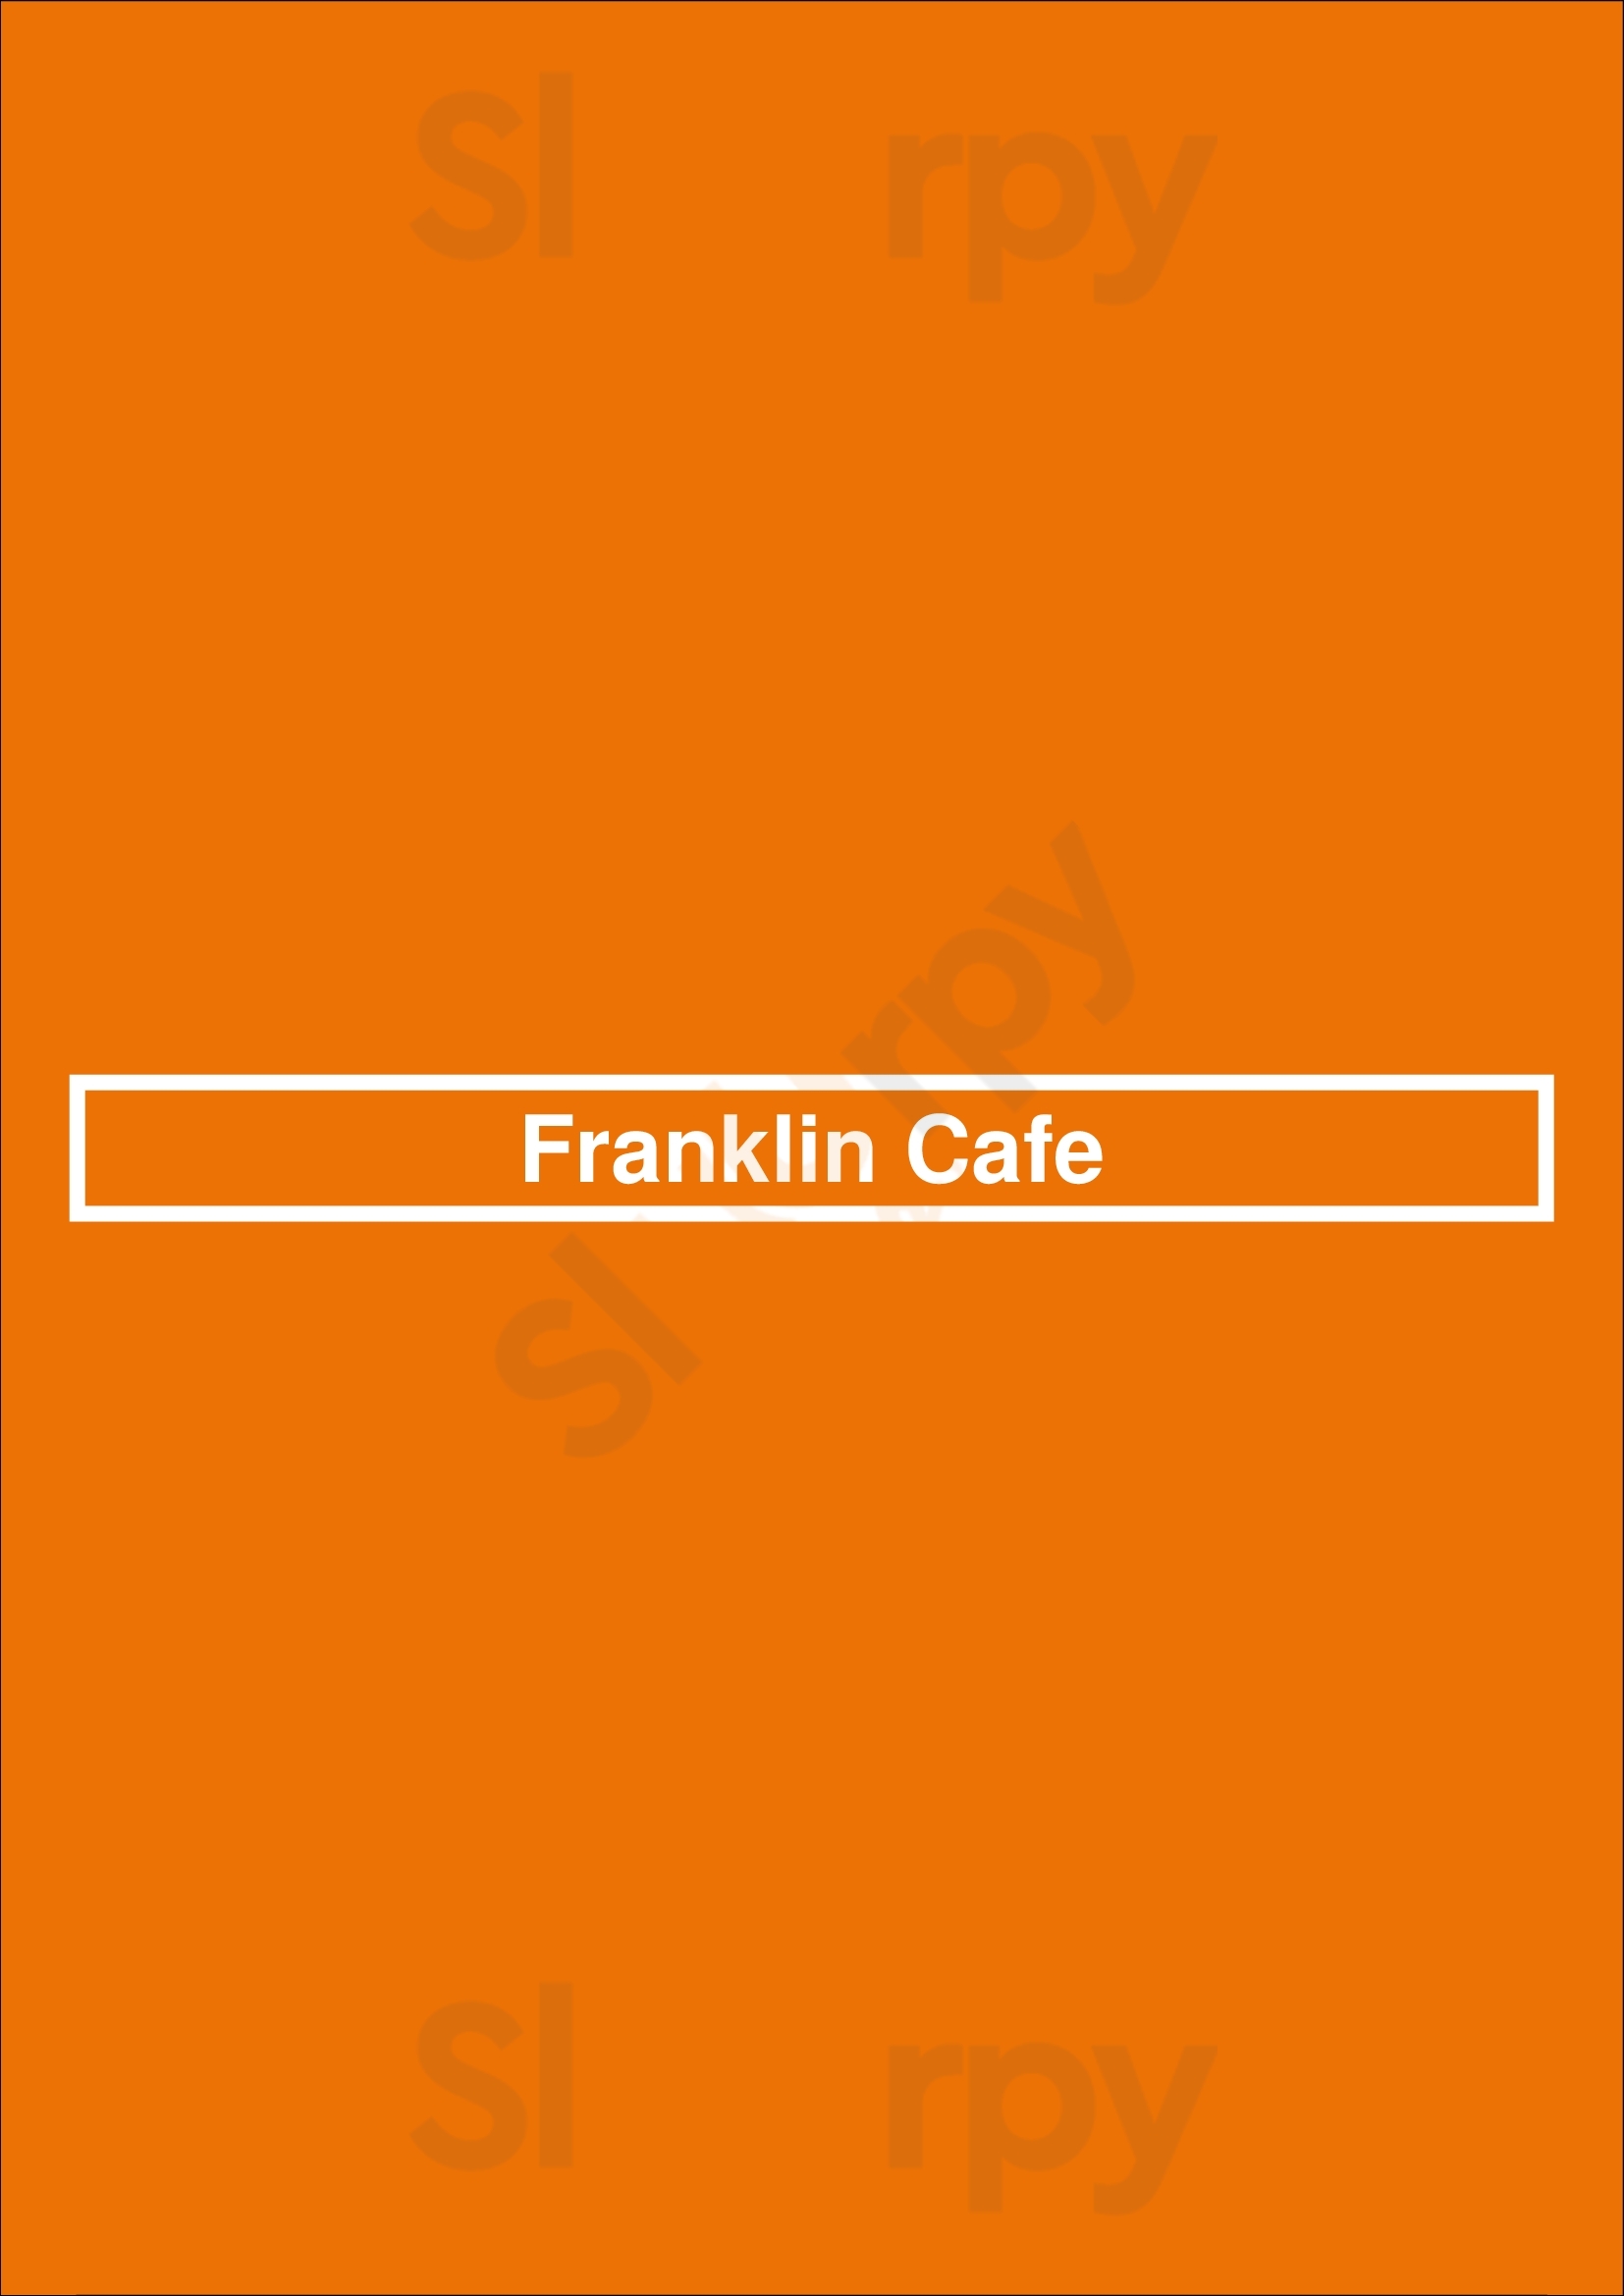 Franklin Cafe Boston Menu - 1